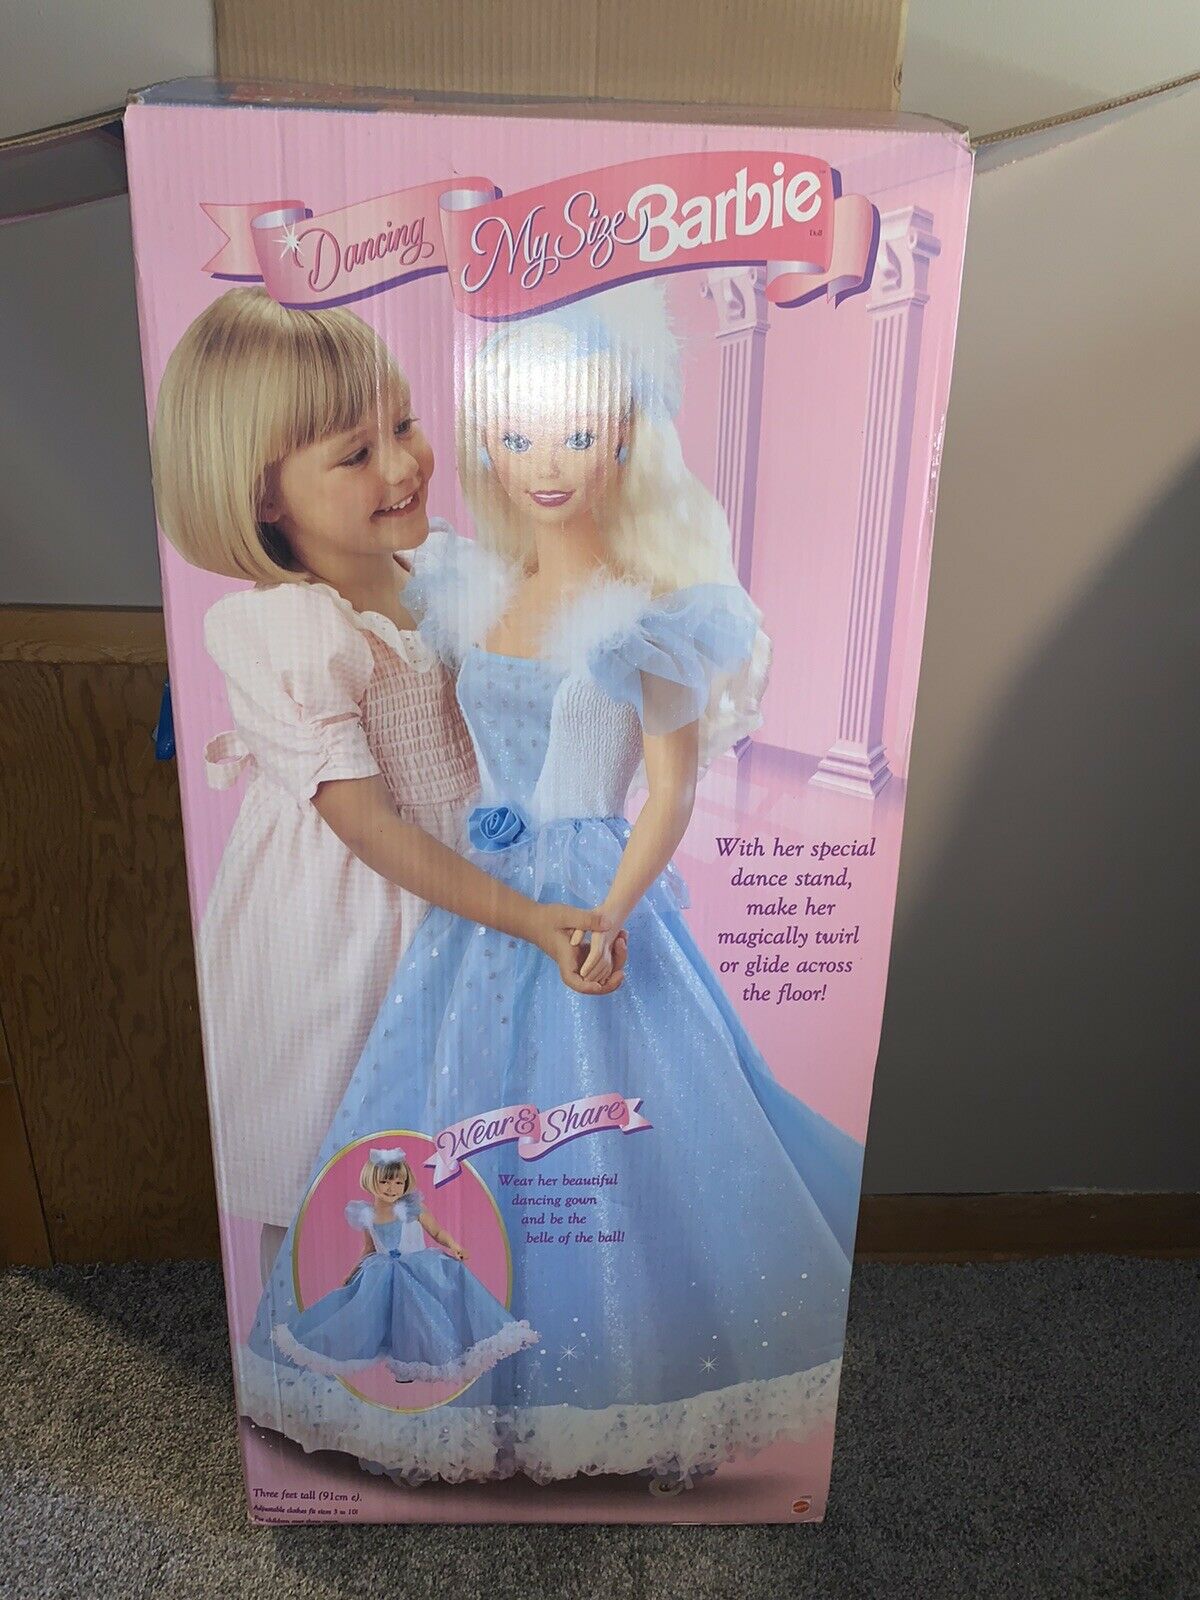 Vintage 1996 Mattel Dancing My Size Barbie In Original Box ~ Excellent Shape